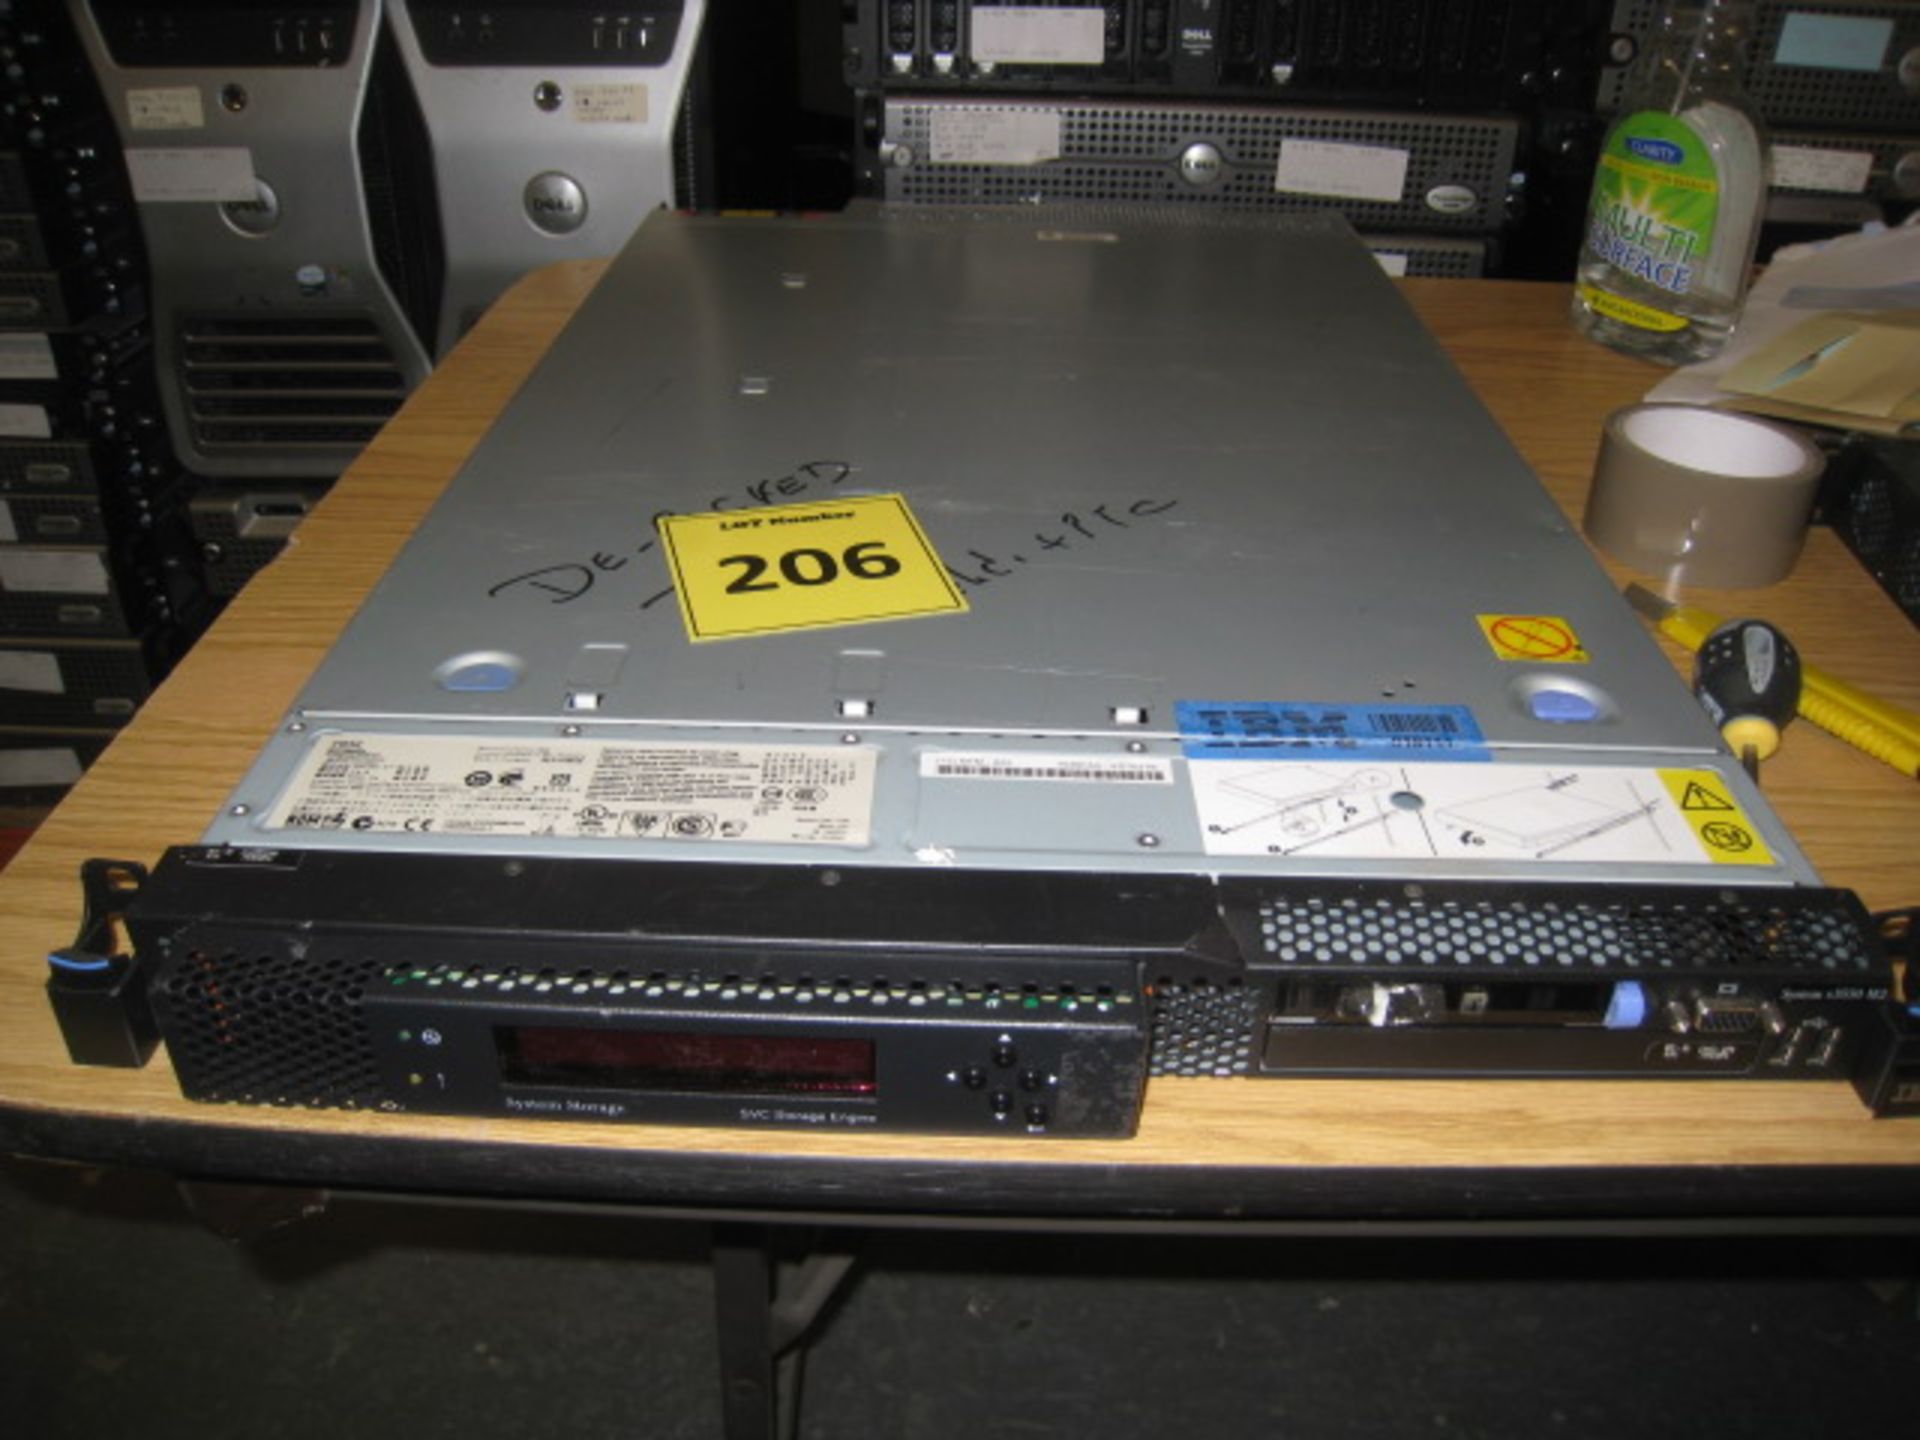 IBM X3550 M2 IU file server, Xeon E5530 2.4 Quad Core processor/24Gb Ram/2 x 73Gb HDD's